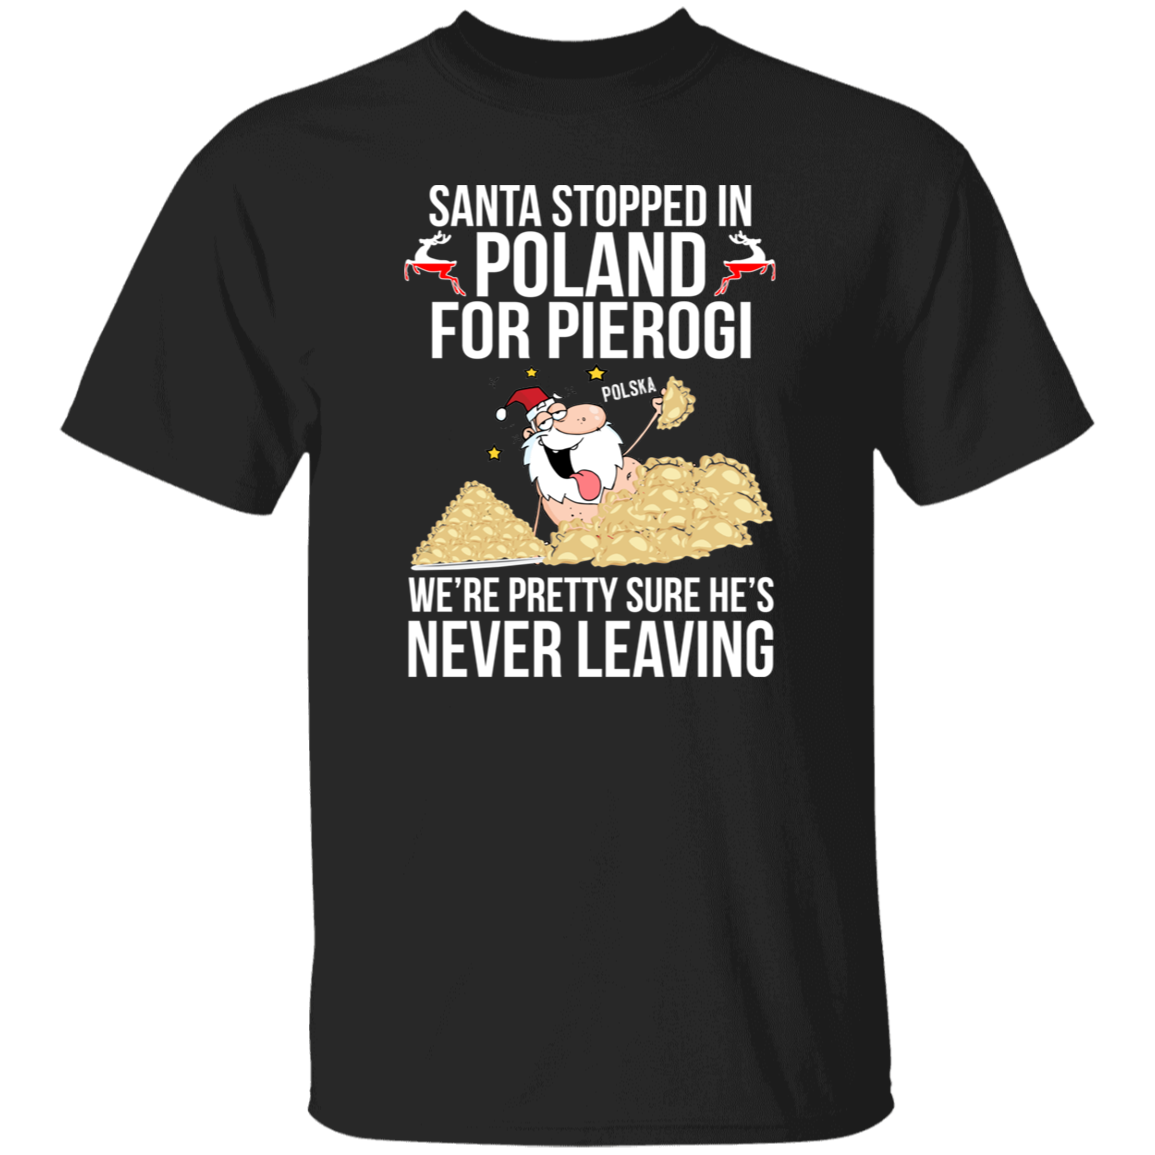 Santa Stopped in Poland for Pierogi Apparel CustomCat G500 5.3 oz. T-Shirt Black S